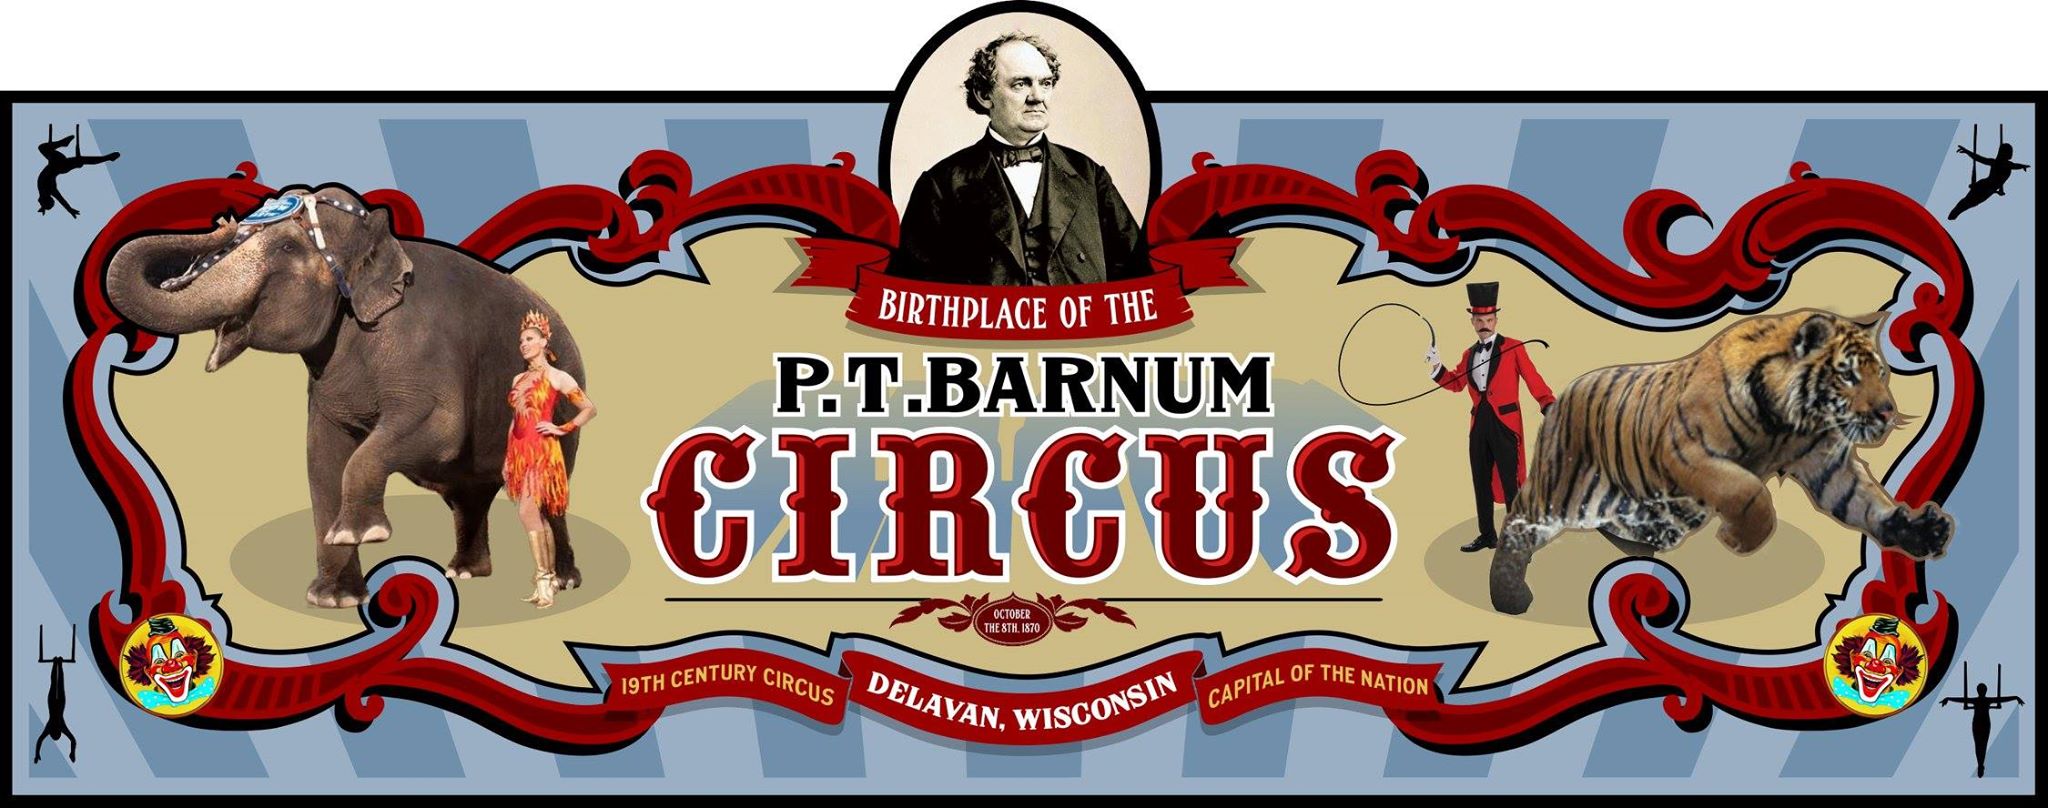 Transportation Company - PT Barnum - Circus